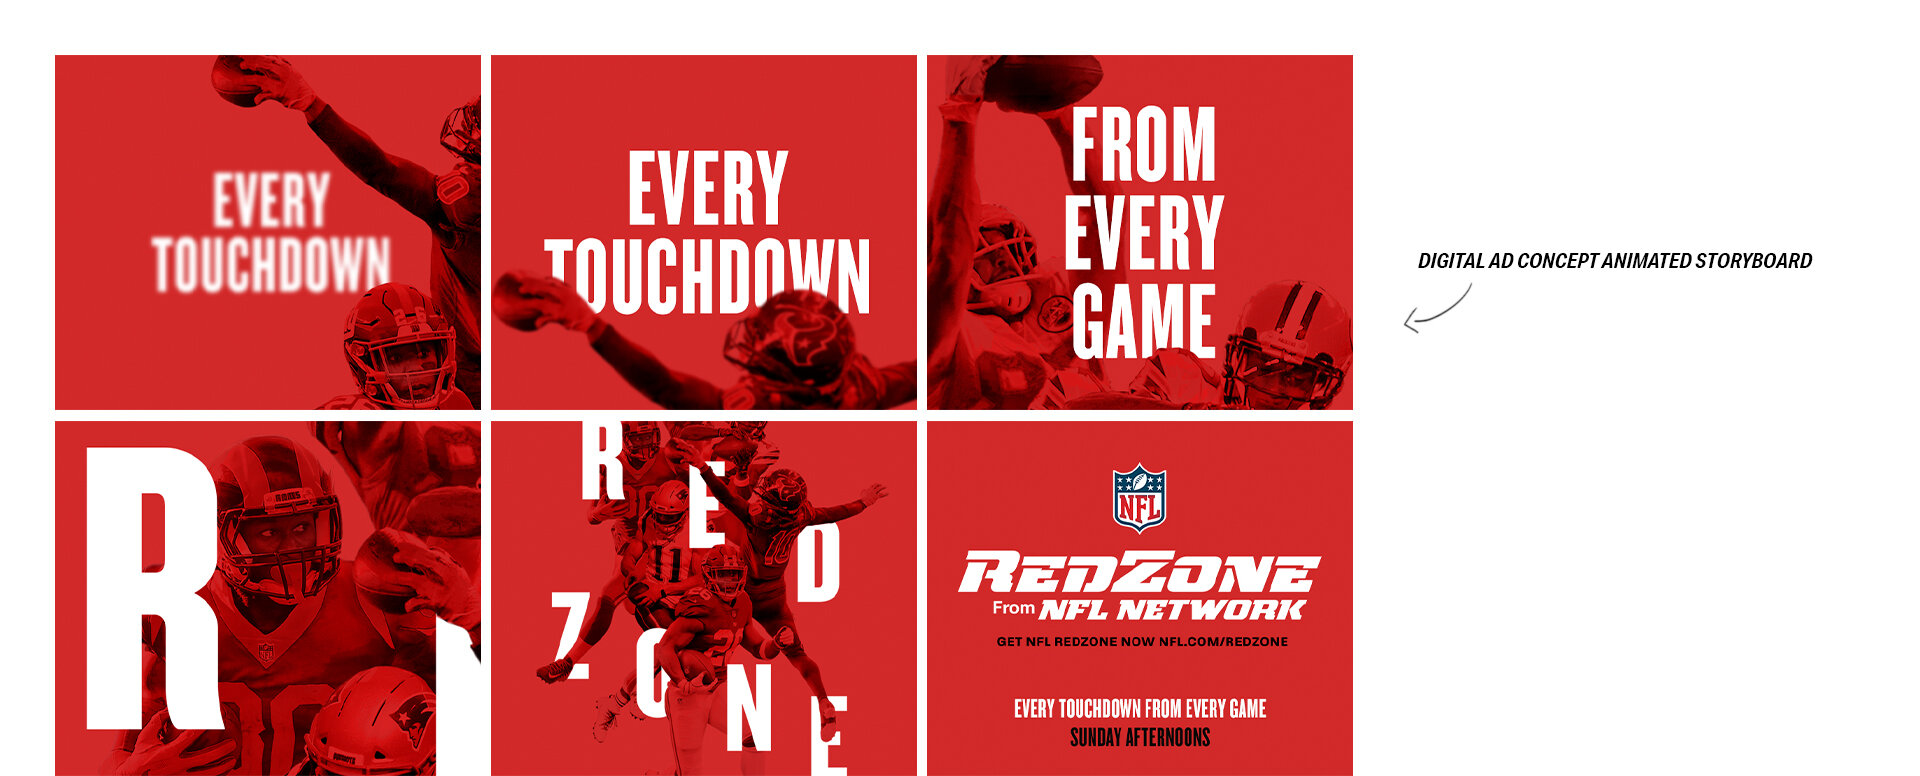 Touchdown frenzy enhanced by NFL RedZone channel - Newsday